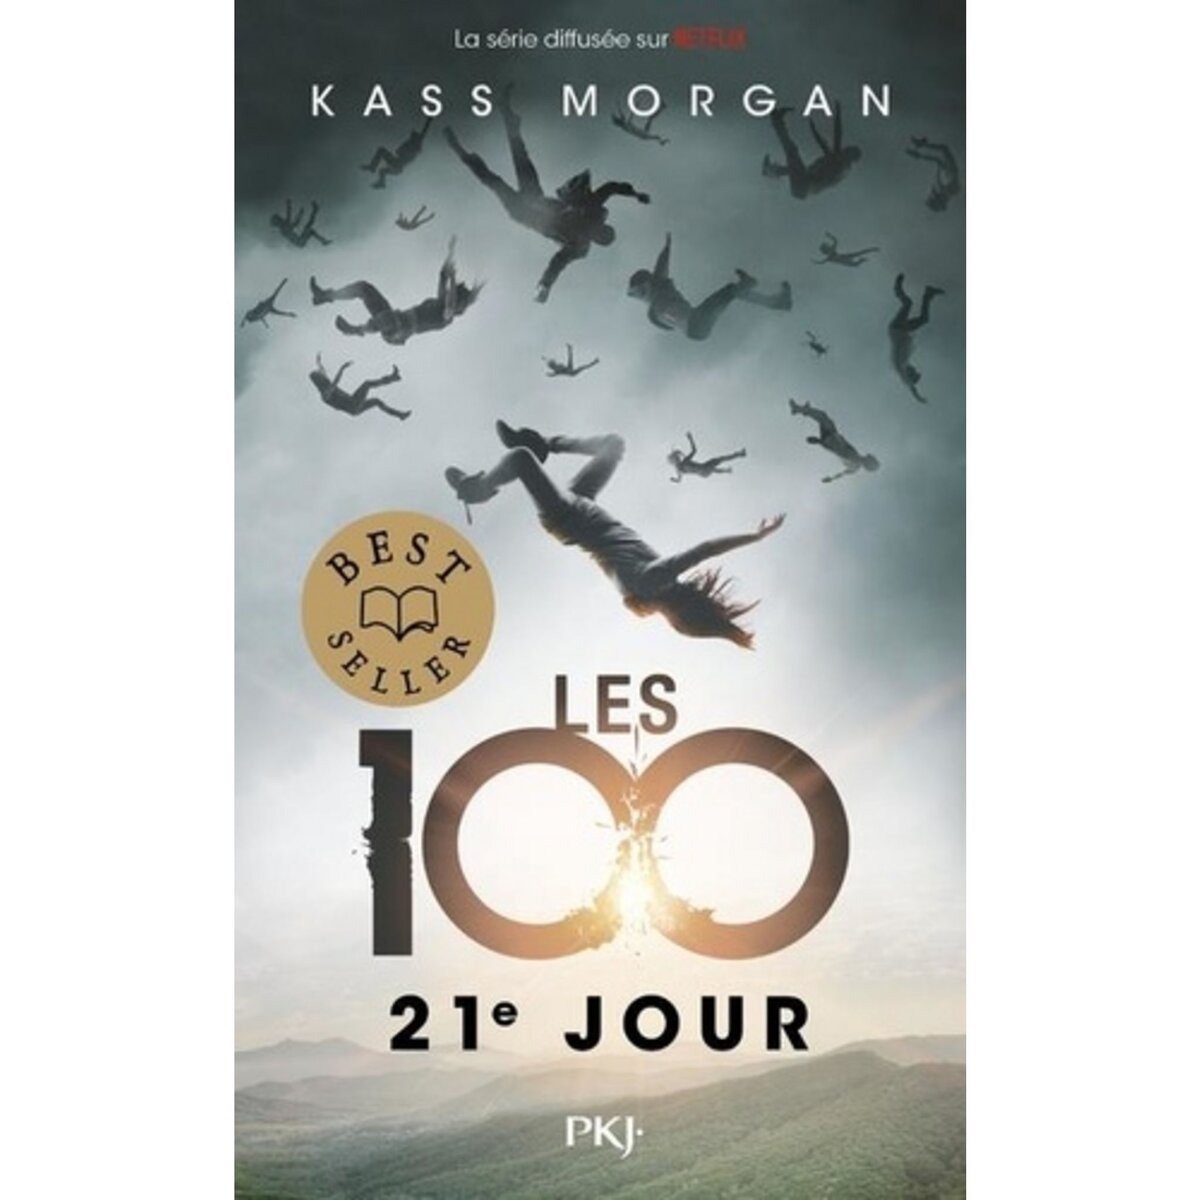  LES 100 TOME 2 : 21E JOUR, Morgan Kass